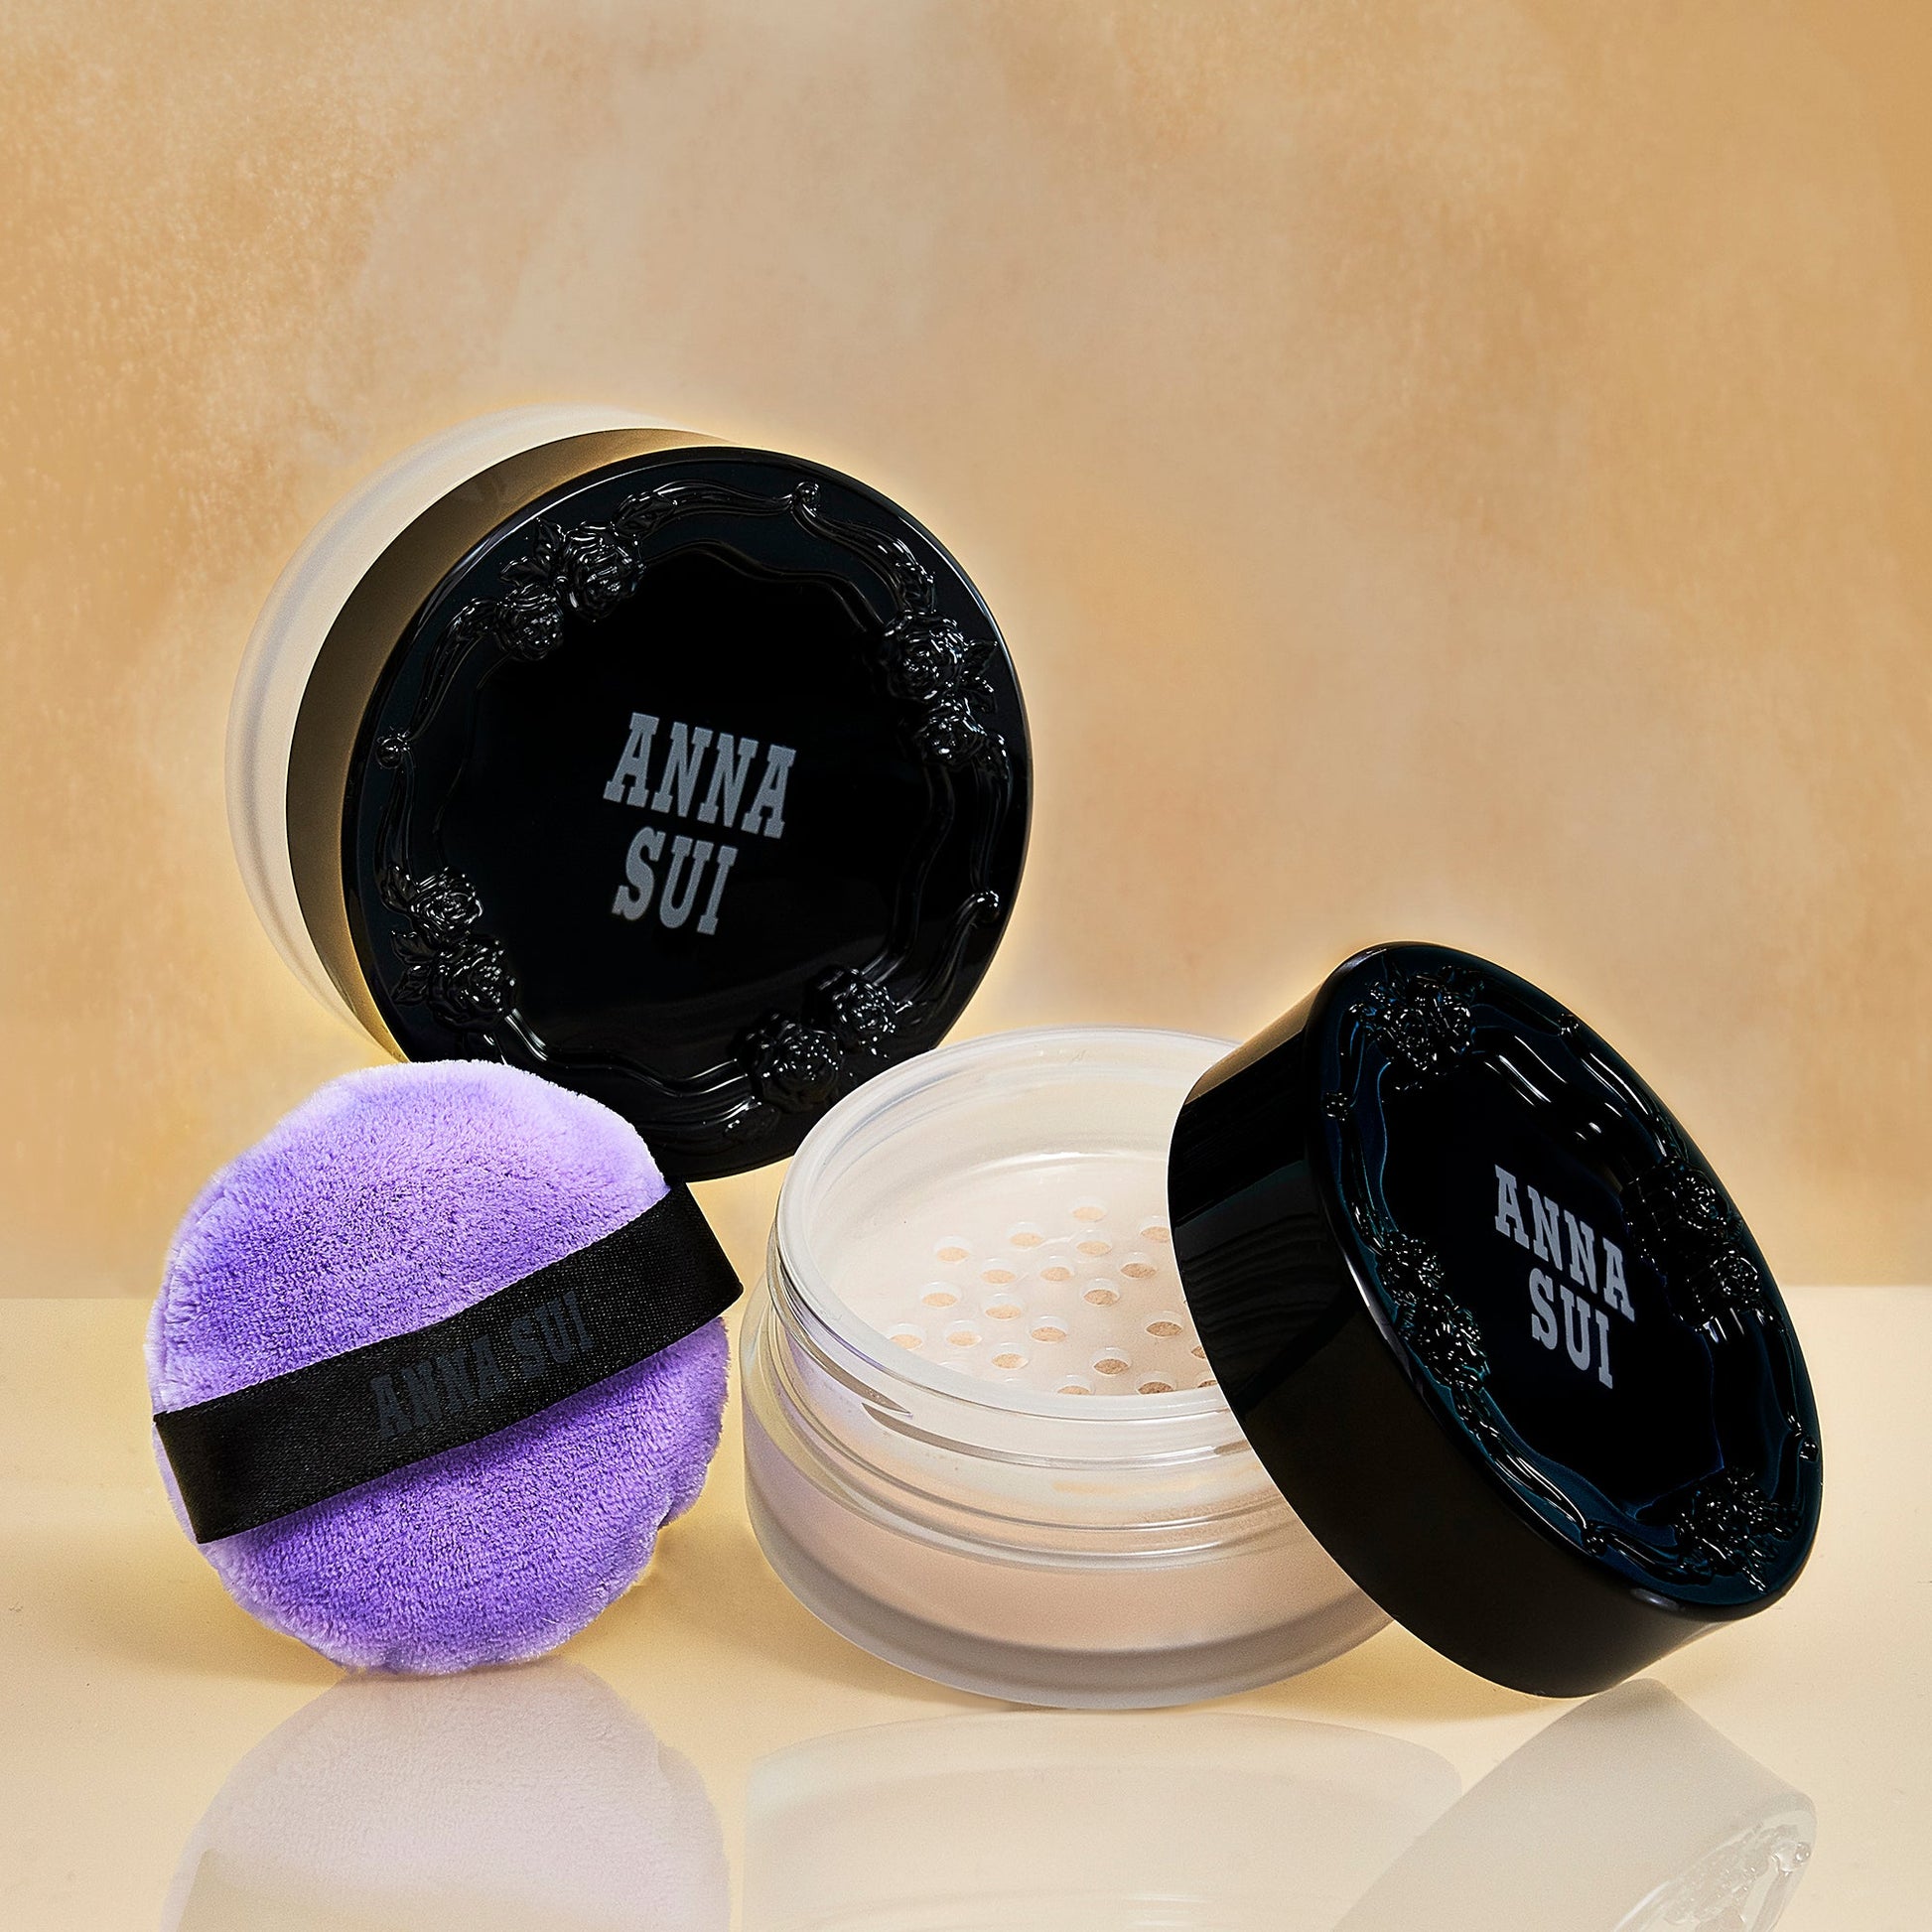 Transparent bottom round case, a purple pad, black lid raised rose pattern, Anna Sui label top lid